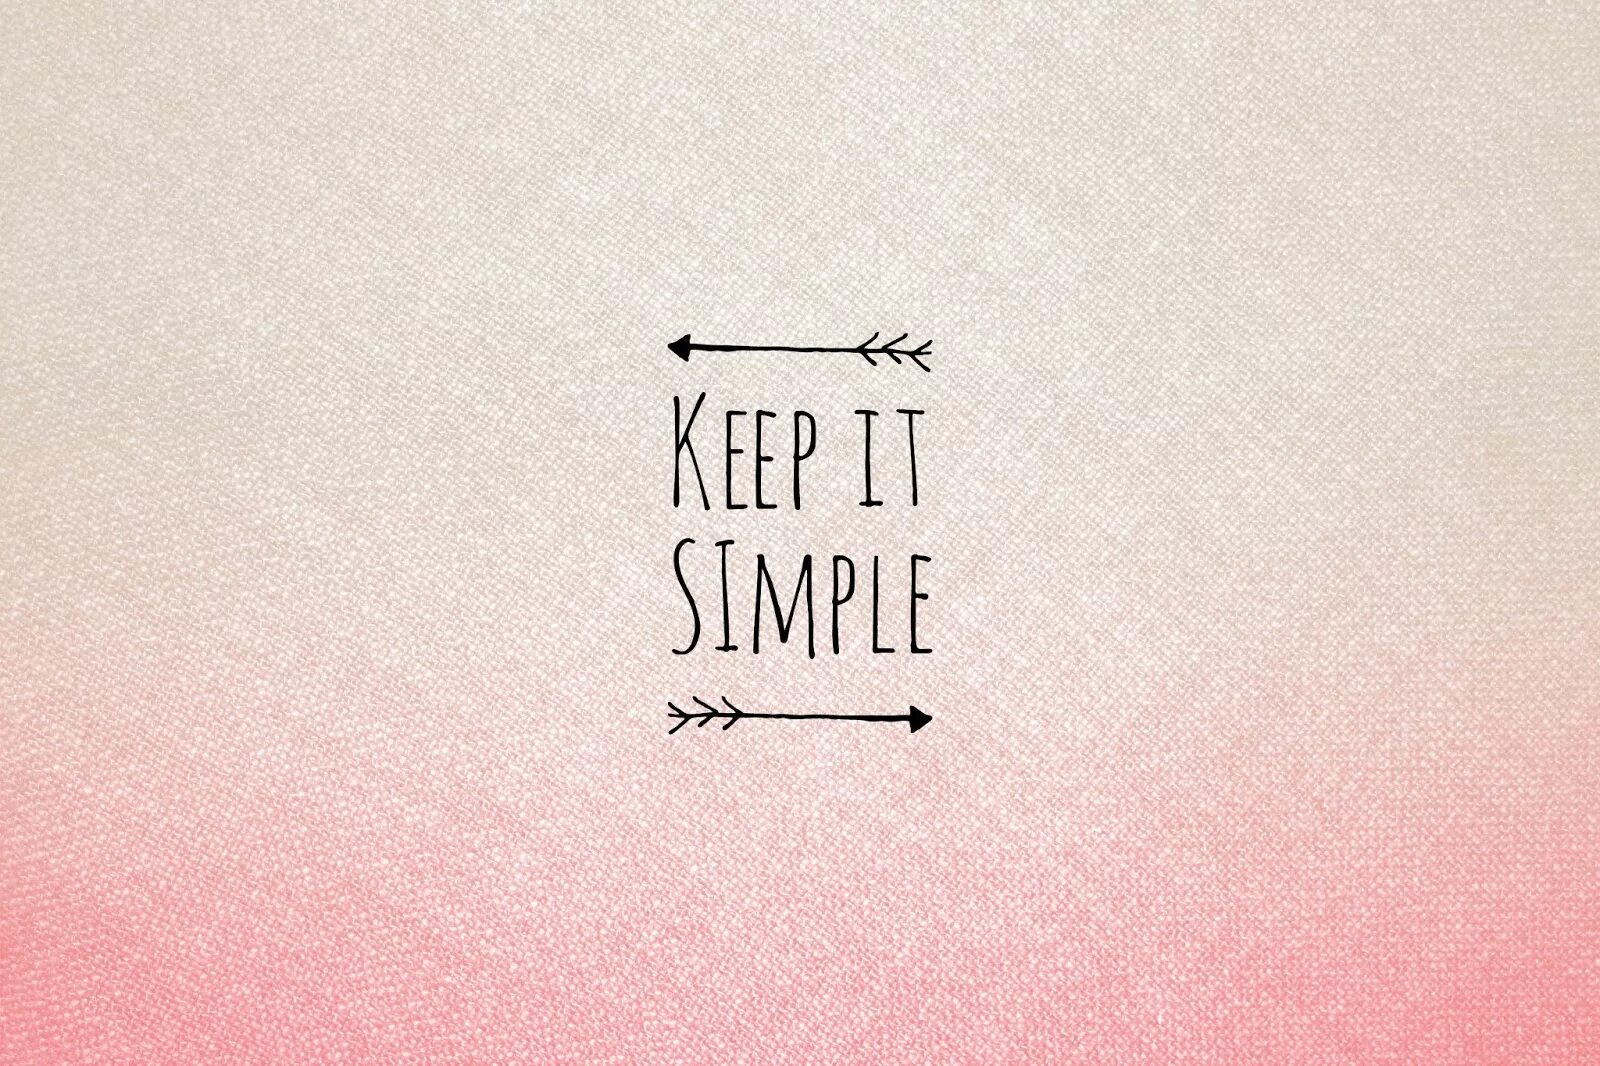 Simply make it. Обои simple. Simple заставки. Keep it simple. Keep smile обои.